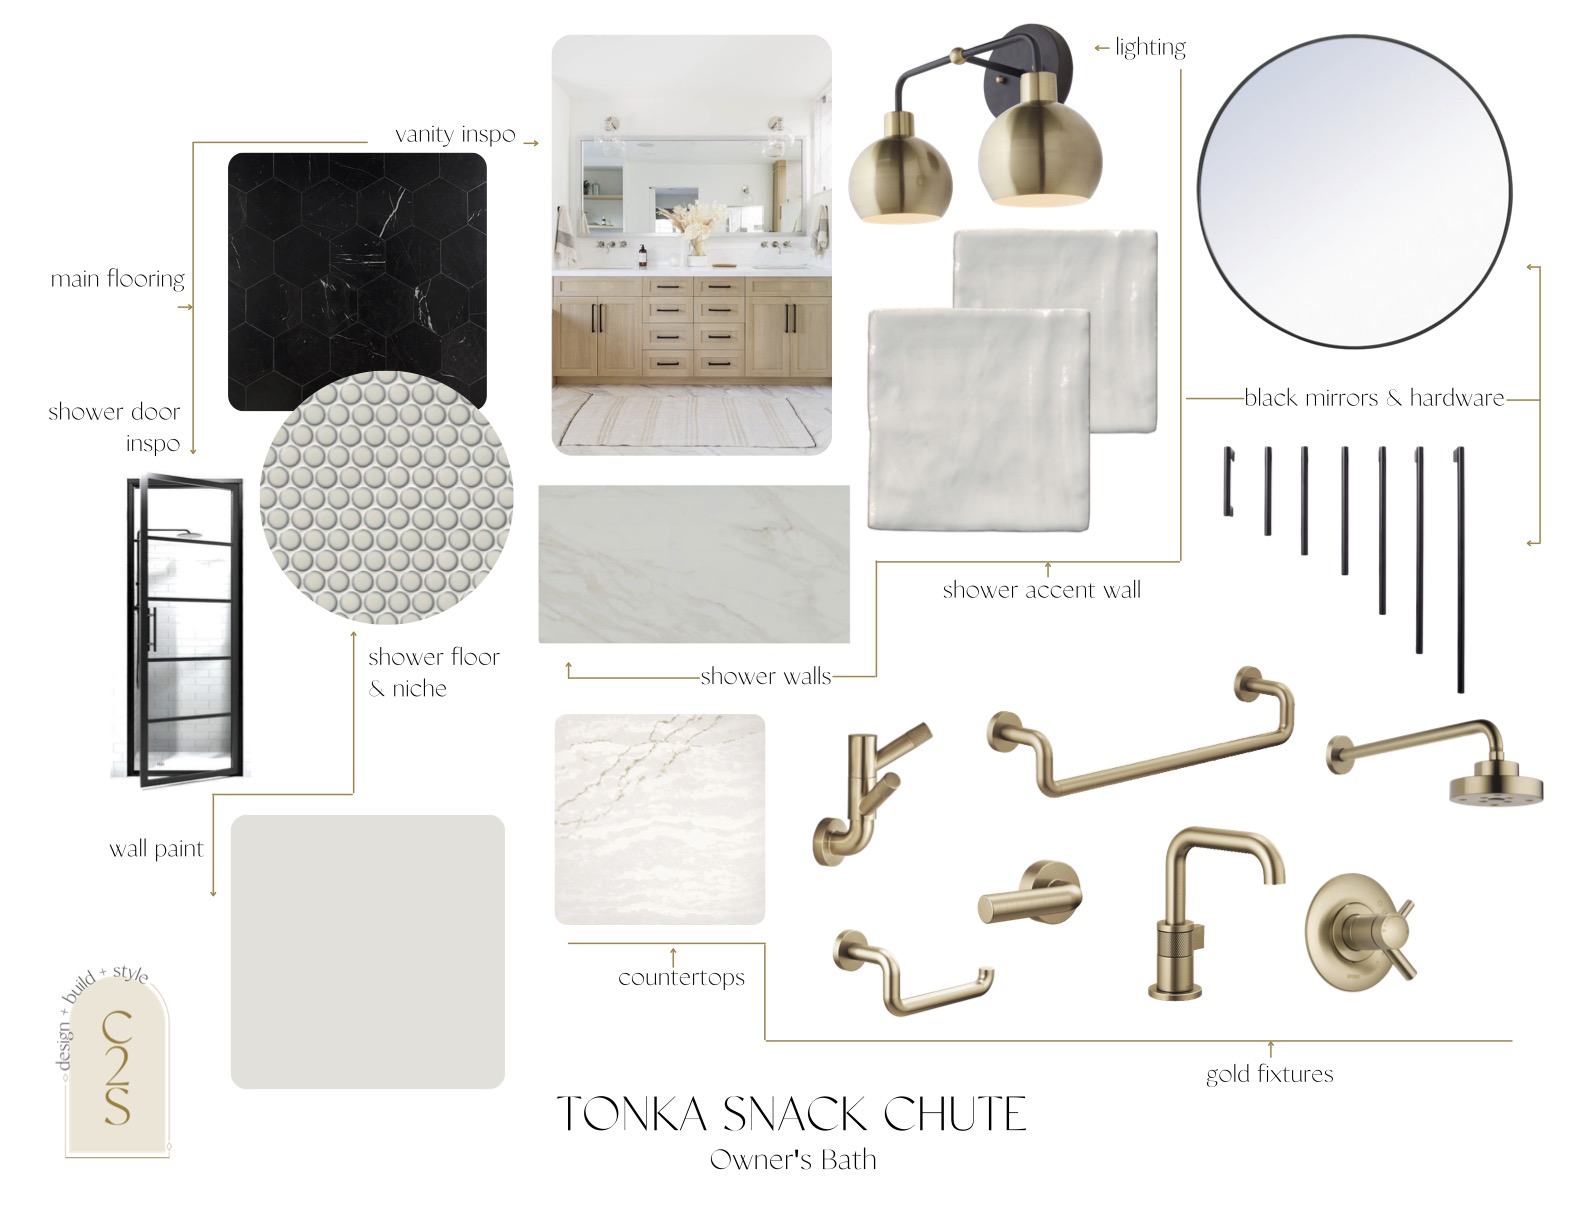 Tonka Snack Chute | Owner's Bath Design